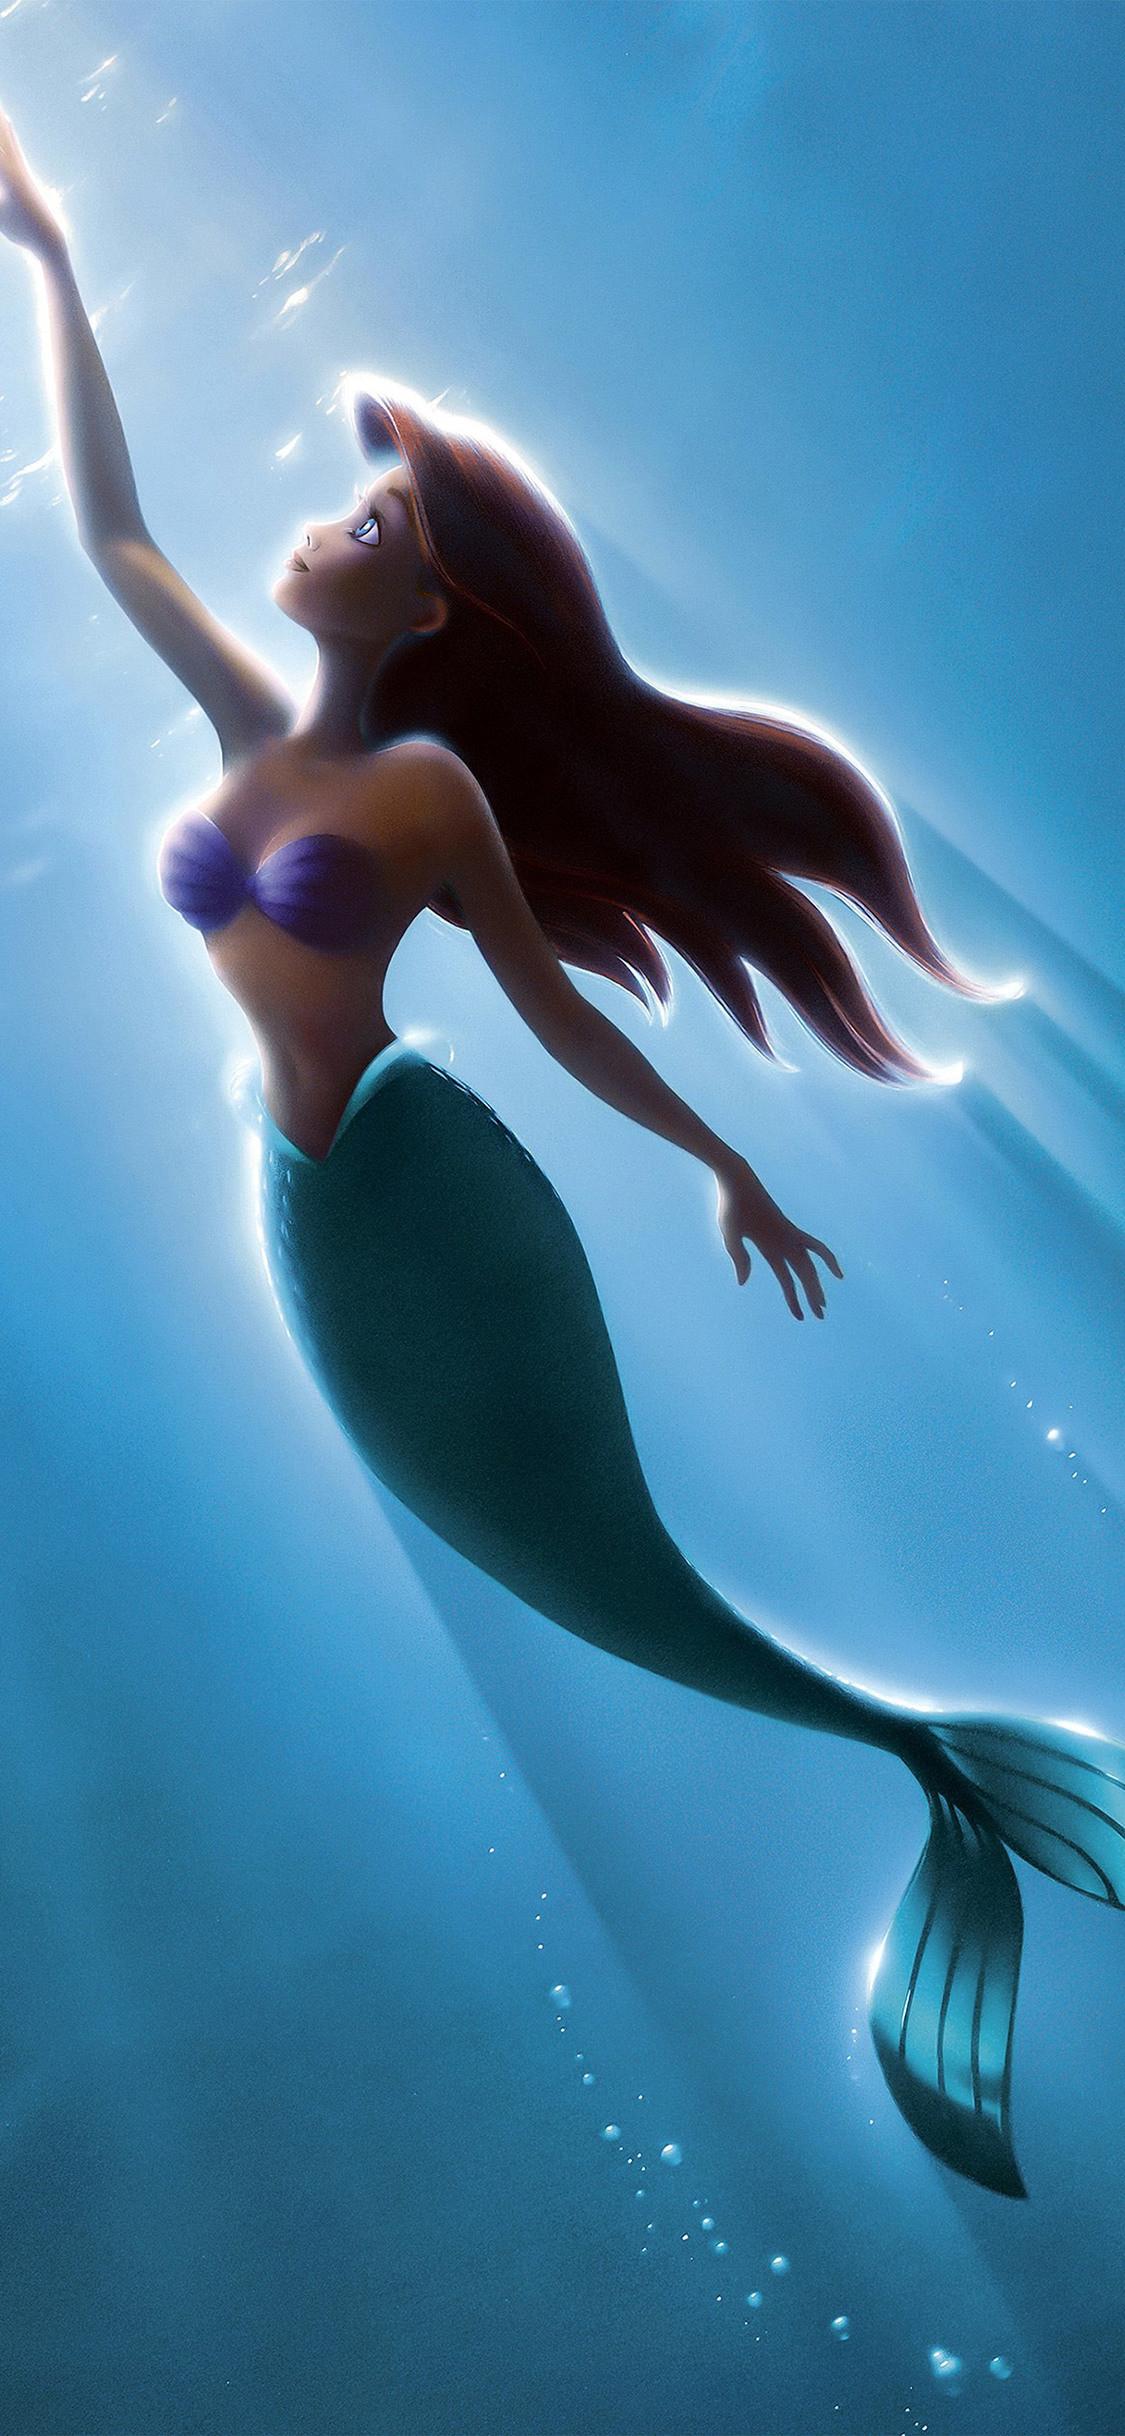 Little Mermaid iPhone Wallpaper